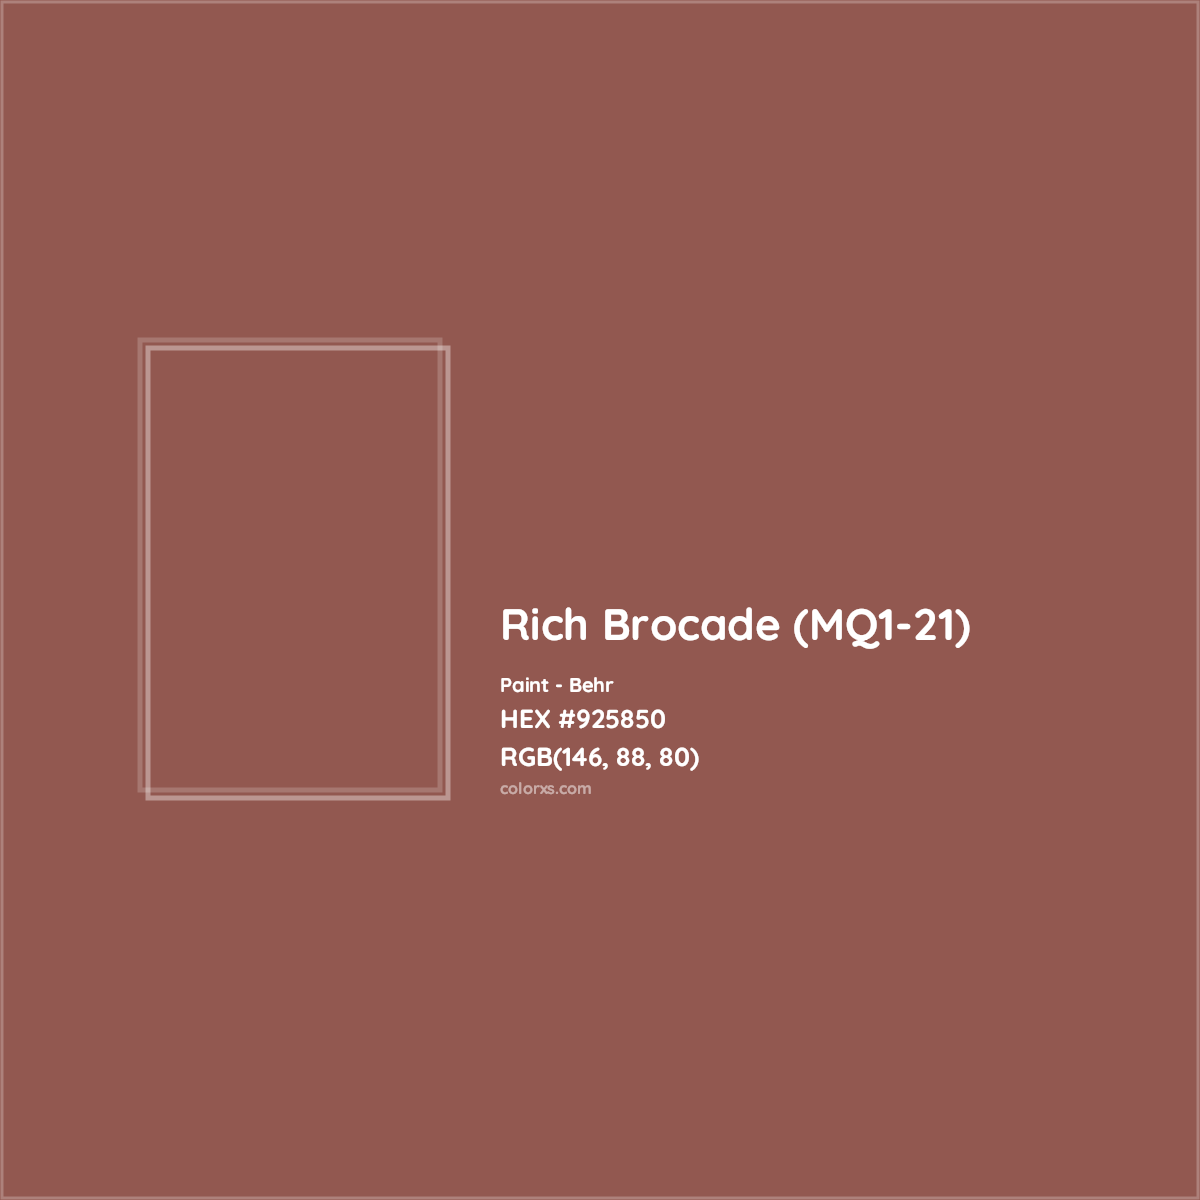 HEX #925850 Rich Brocade (MQ1-21) Paint Behr - Color Code